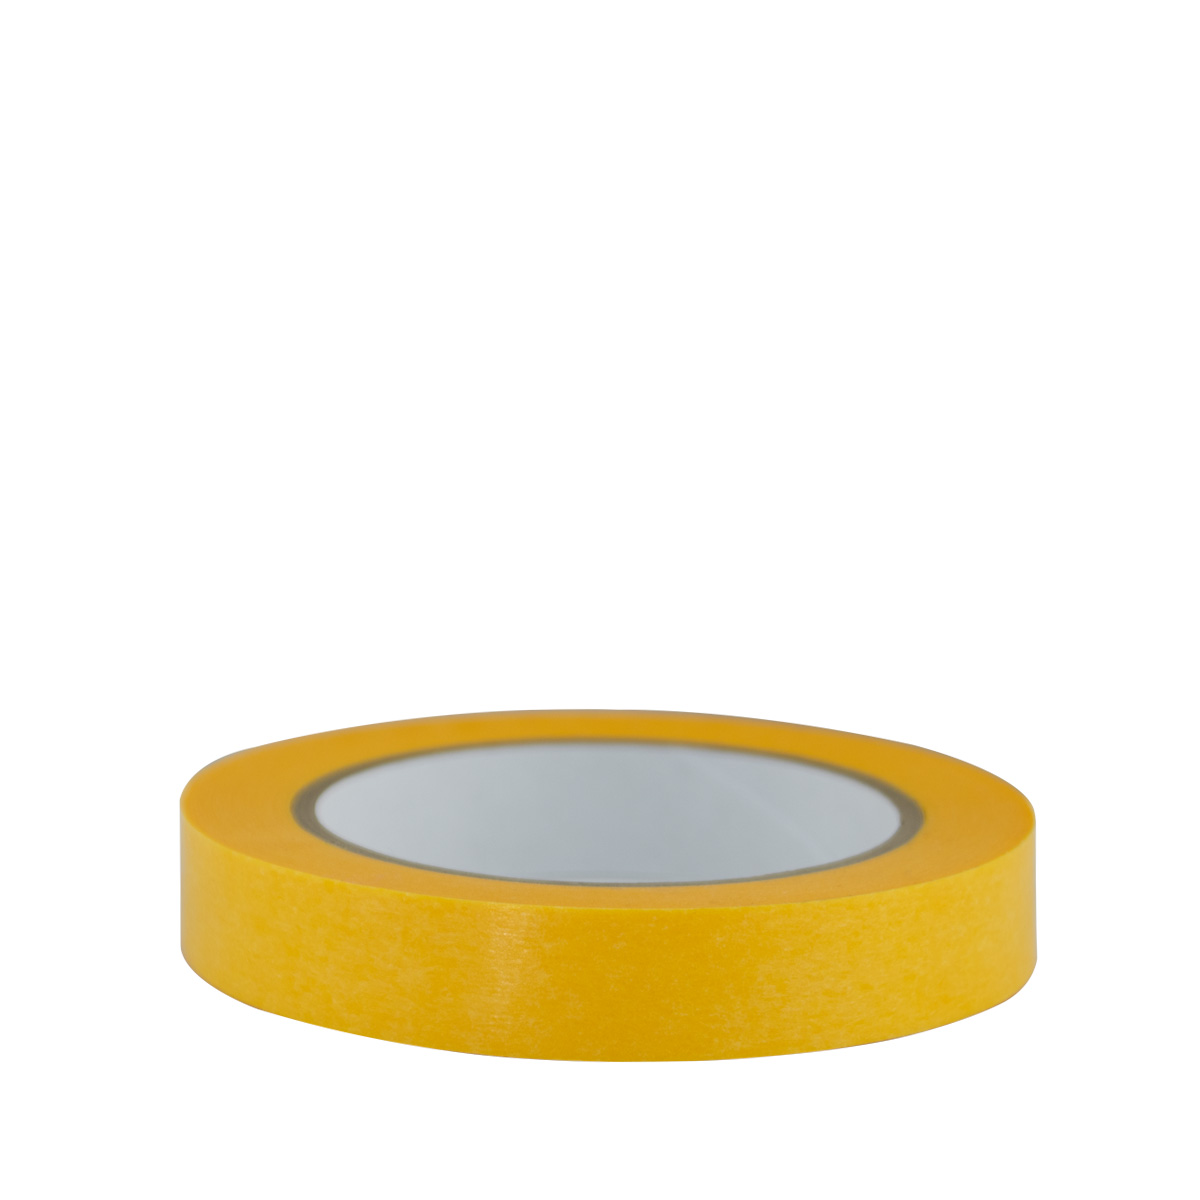 Farbklecks24 Premium Goldband Washi-Tape, 19mmx50m UV90